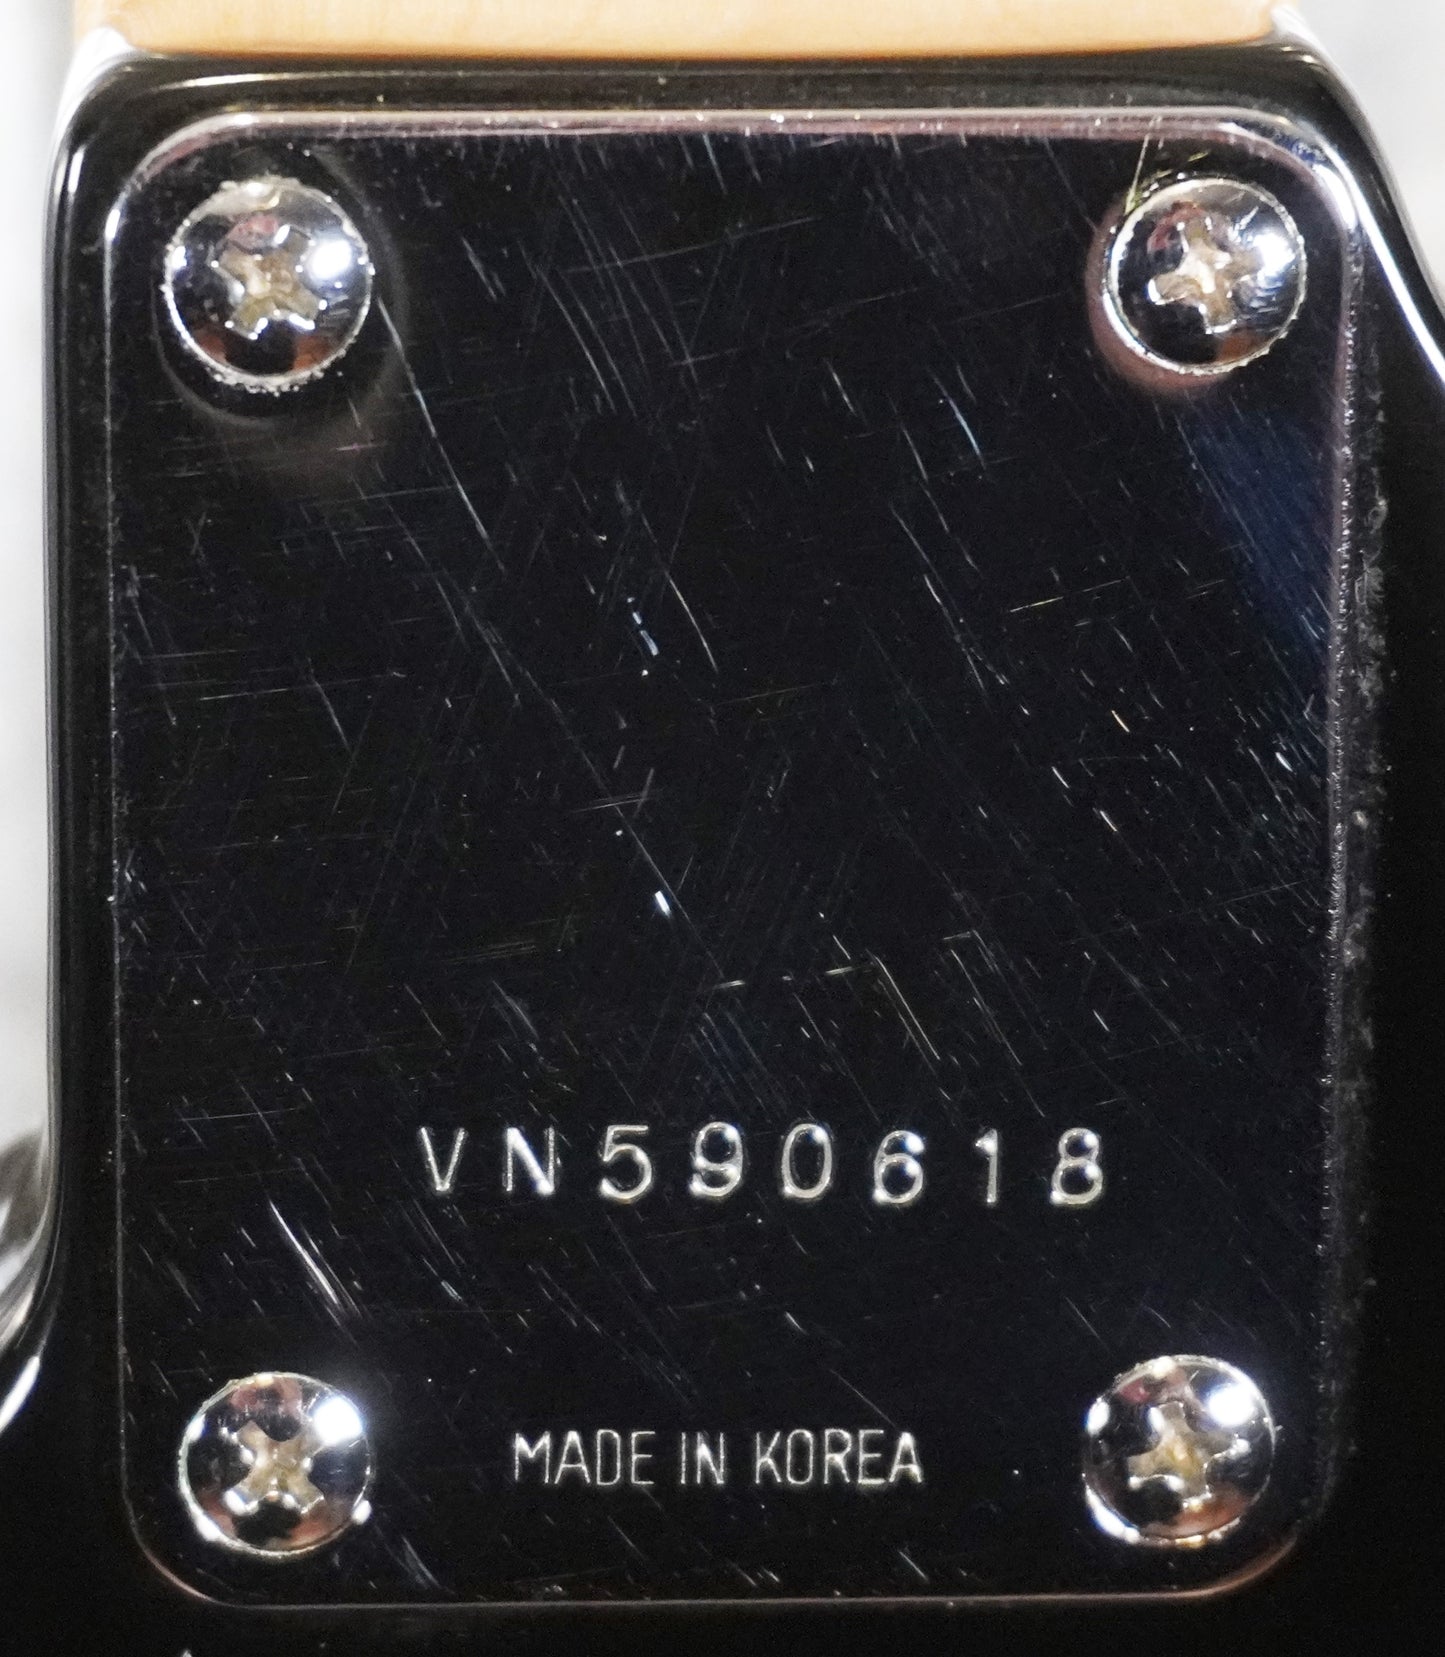 Fender Squier Stratocaster 1995 Korea Black Guitar & Case #0618 Used